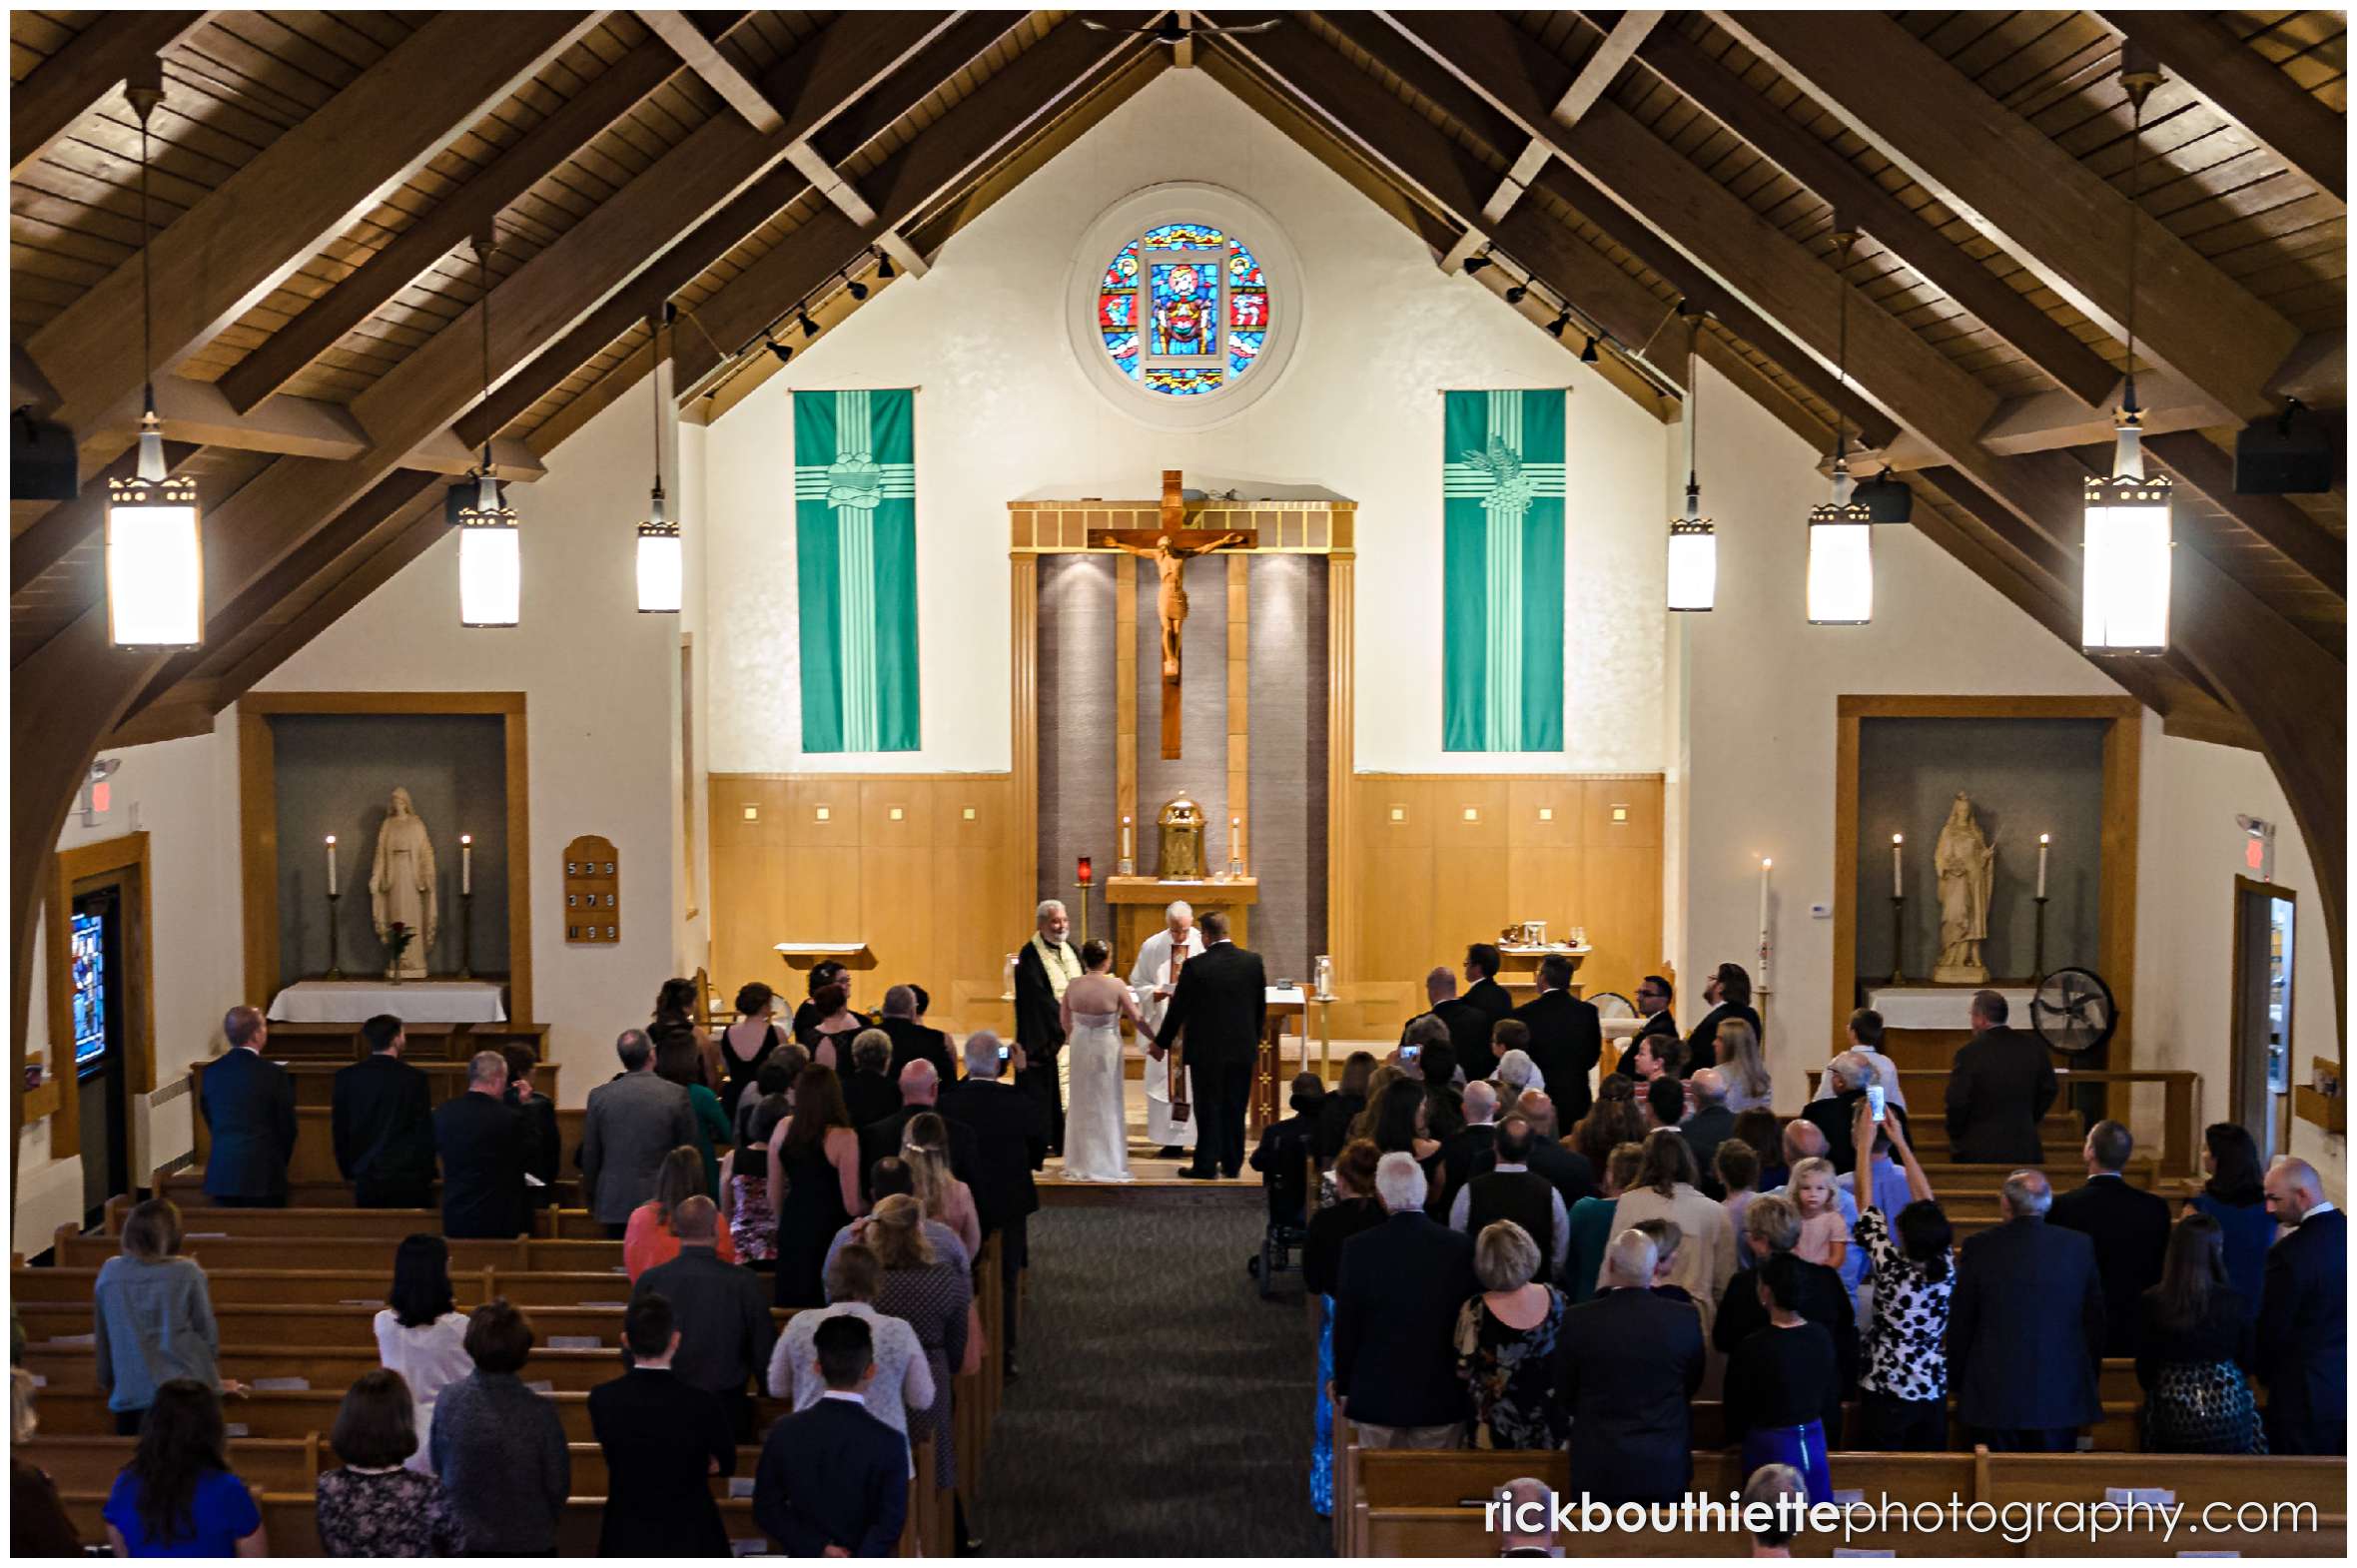 New Hampshire seacoast wedding ceremony at Saint Elizabeth of Hungary Mission Church